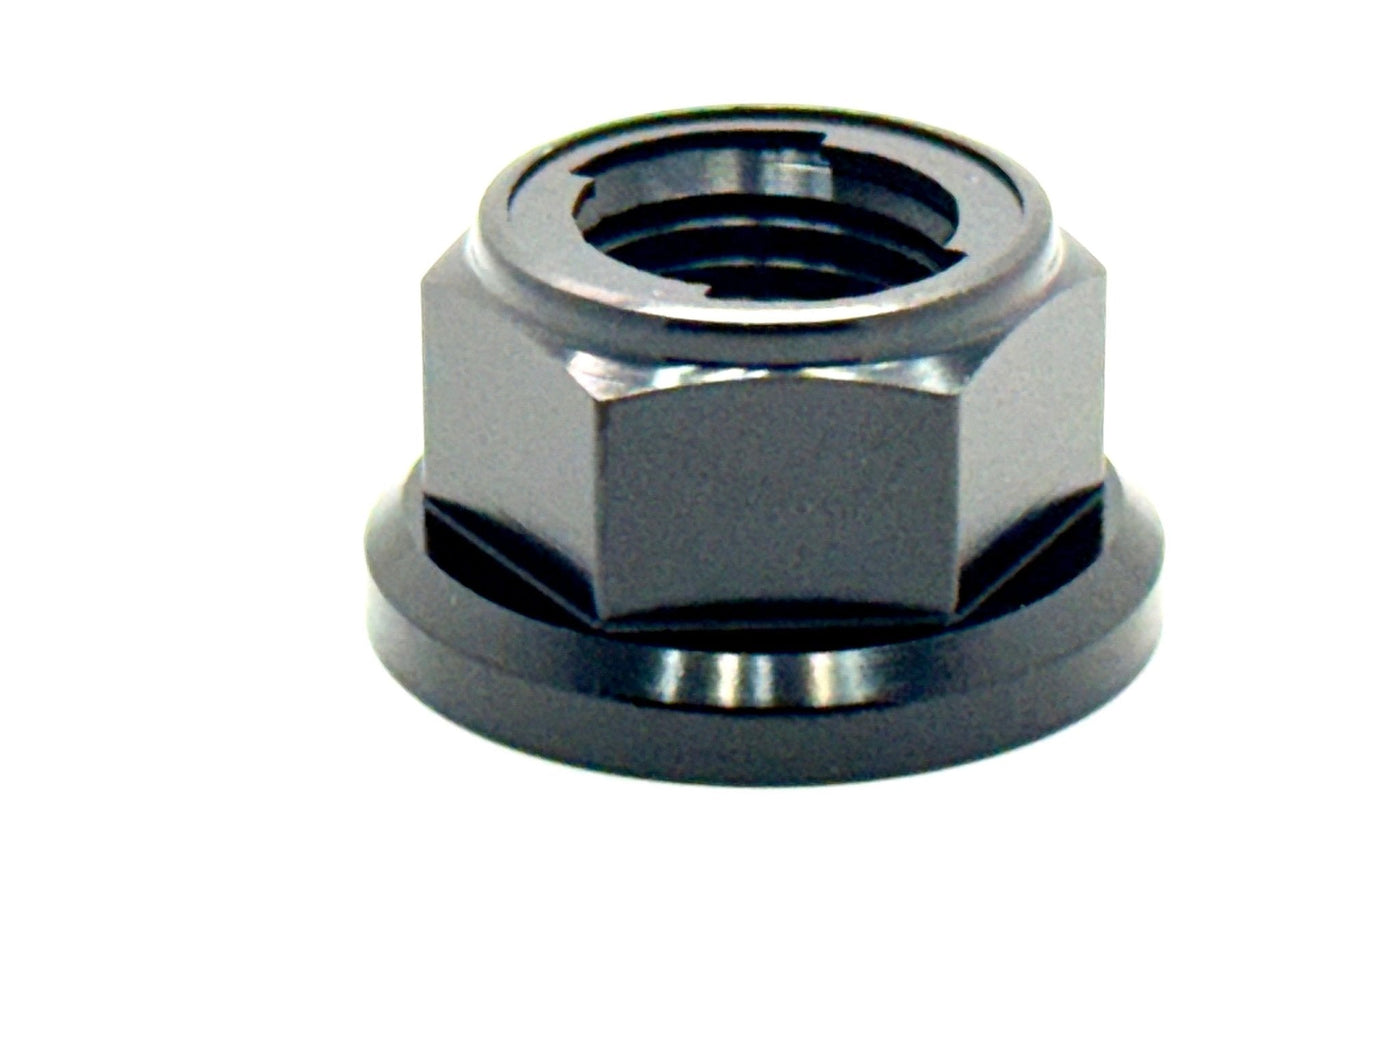 Titanium Rear Axle/ Motor Shaft Nut - M12x1.25 Metal Locking Nut